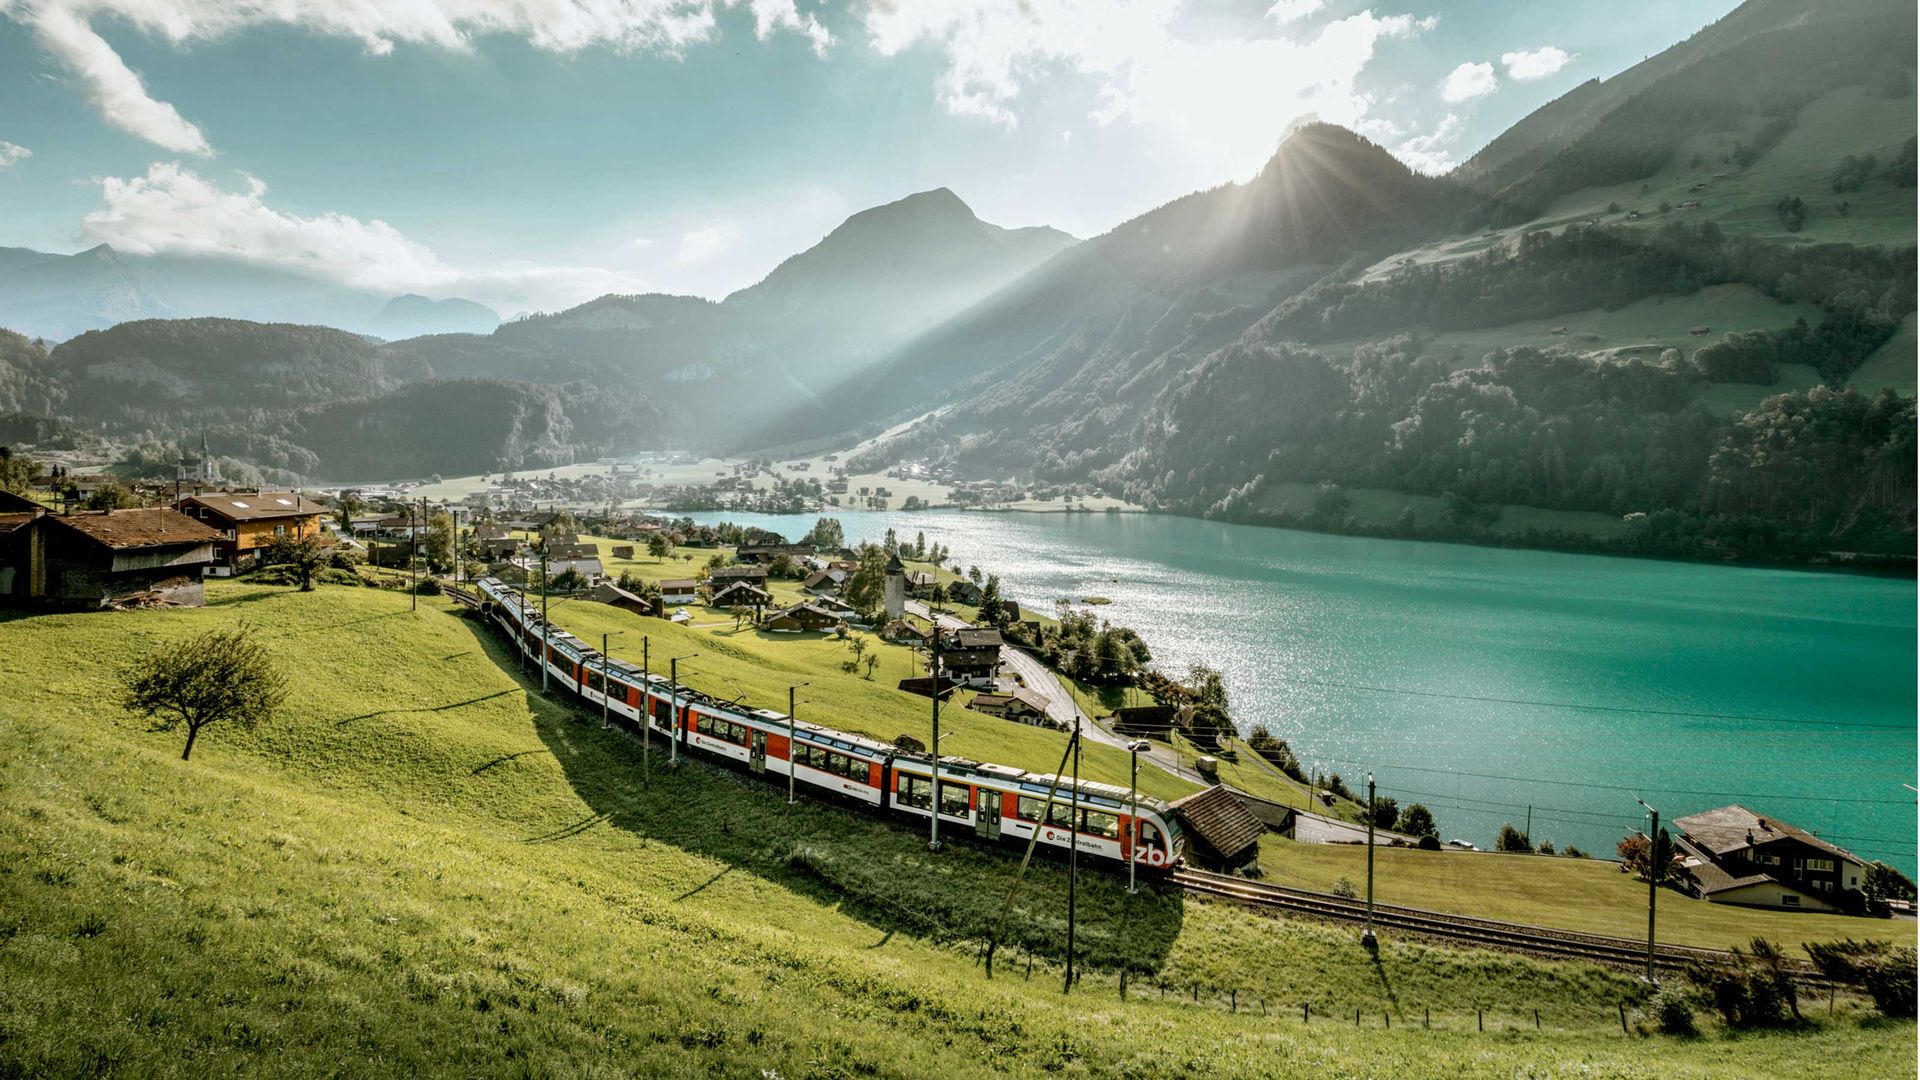 A train traveling through the mountains near a lake.